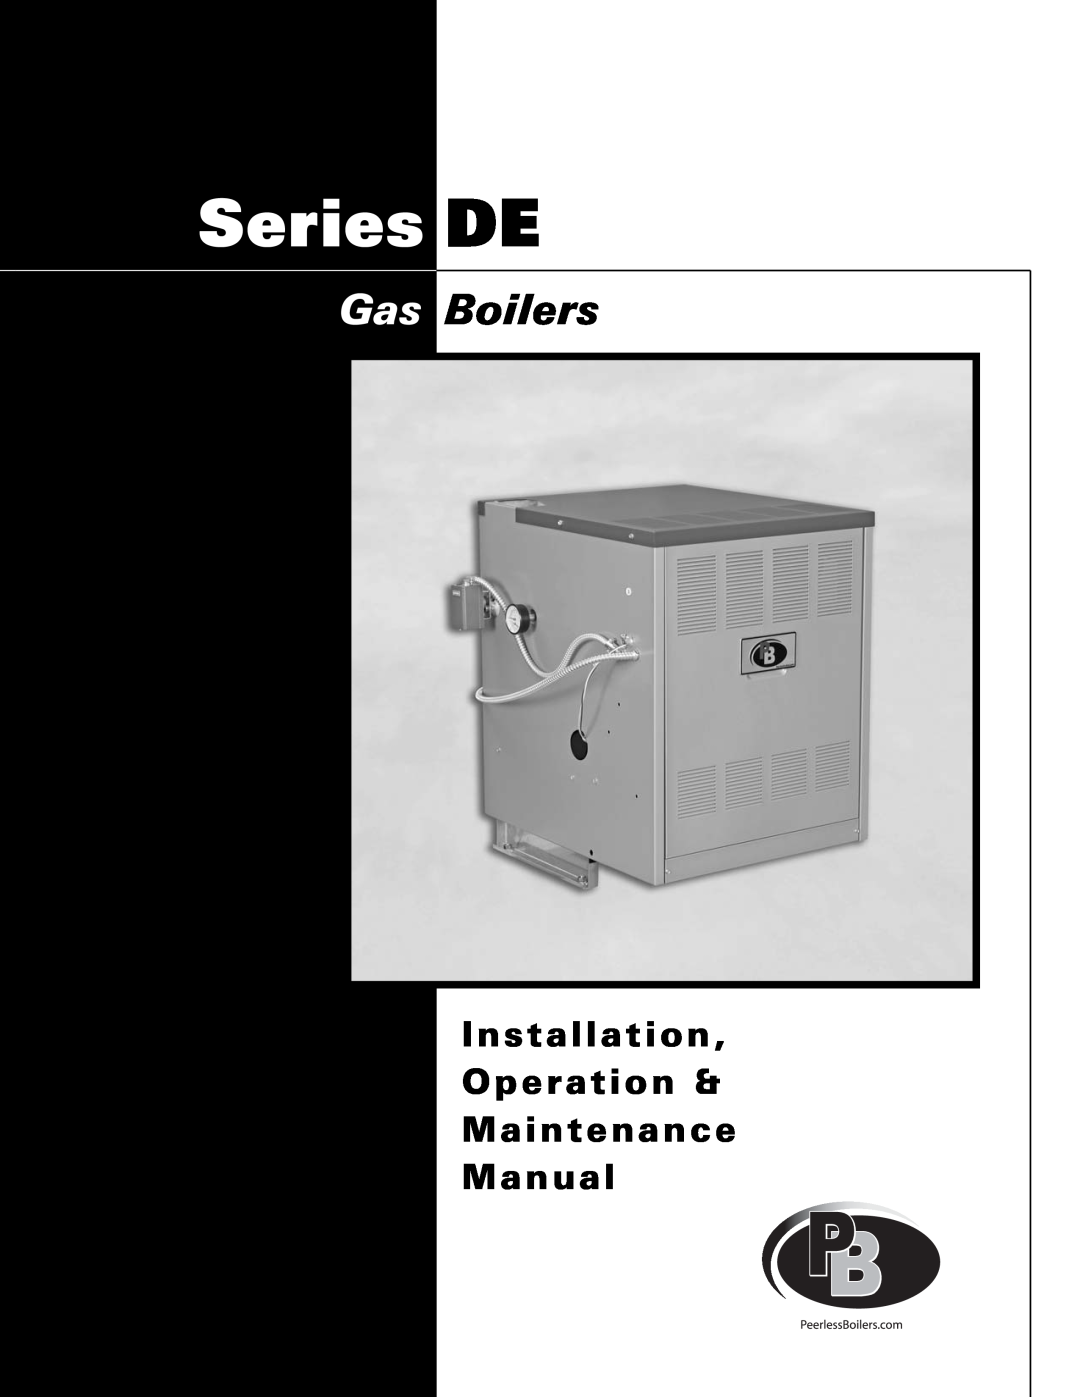 PB Heat manual Gas Boilers, Installation Operation & Maintenance Manual, Series DE 